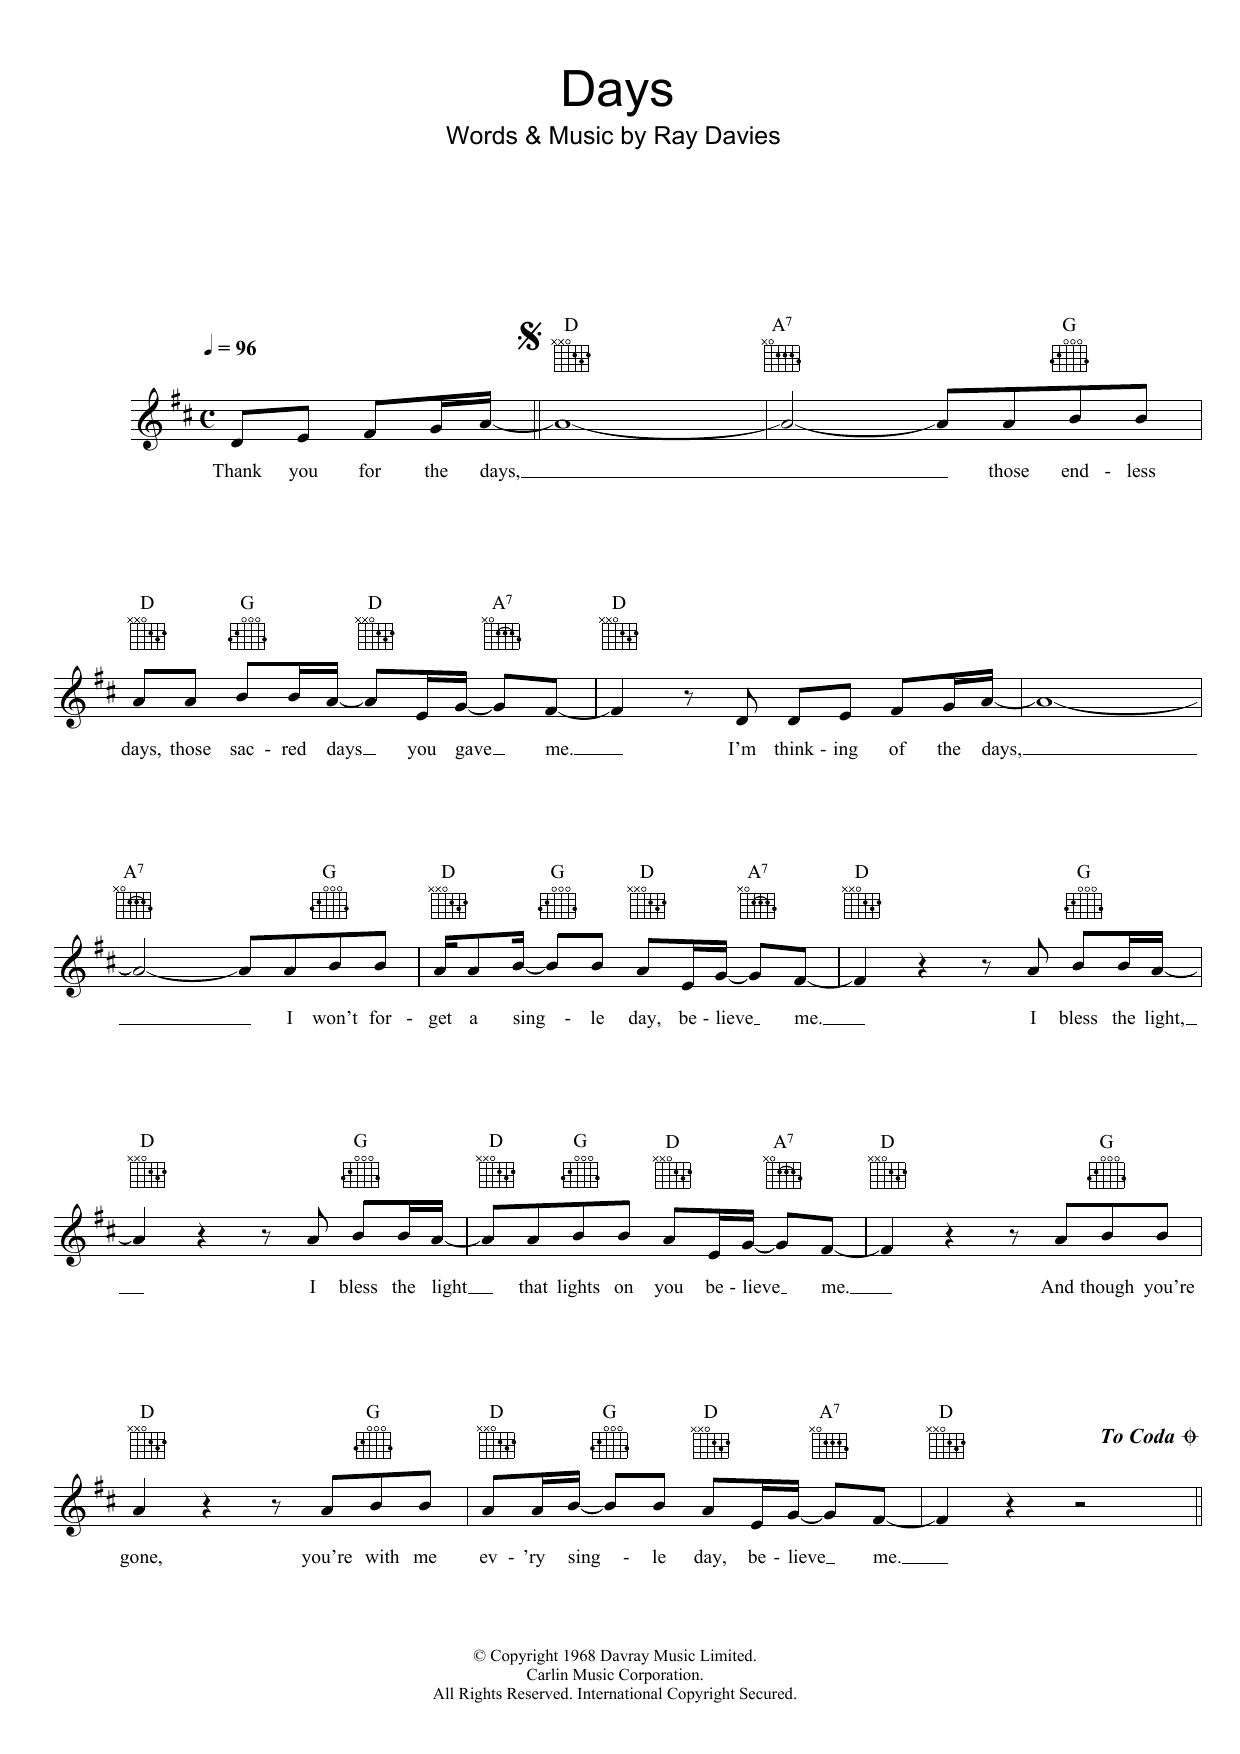 The Kinks Days Sheet Music Notes & Chords for Ukulele - Download or Print PDF